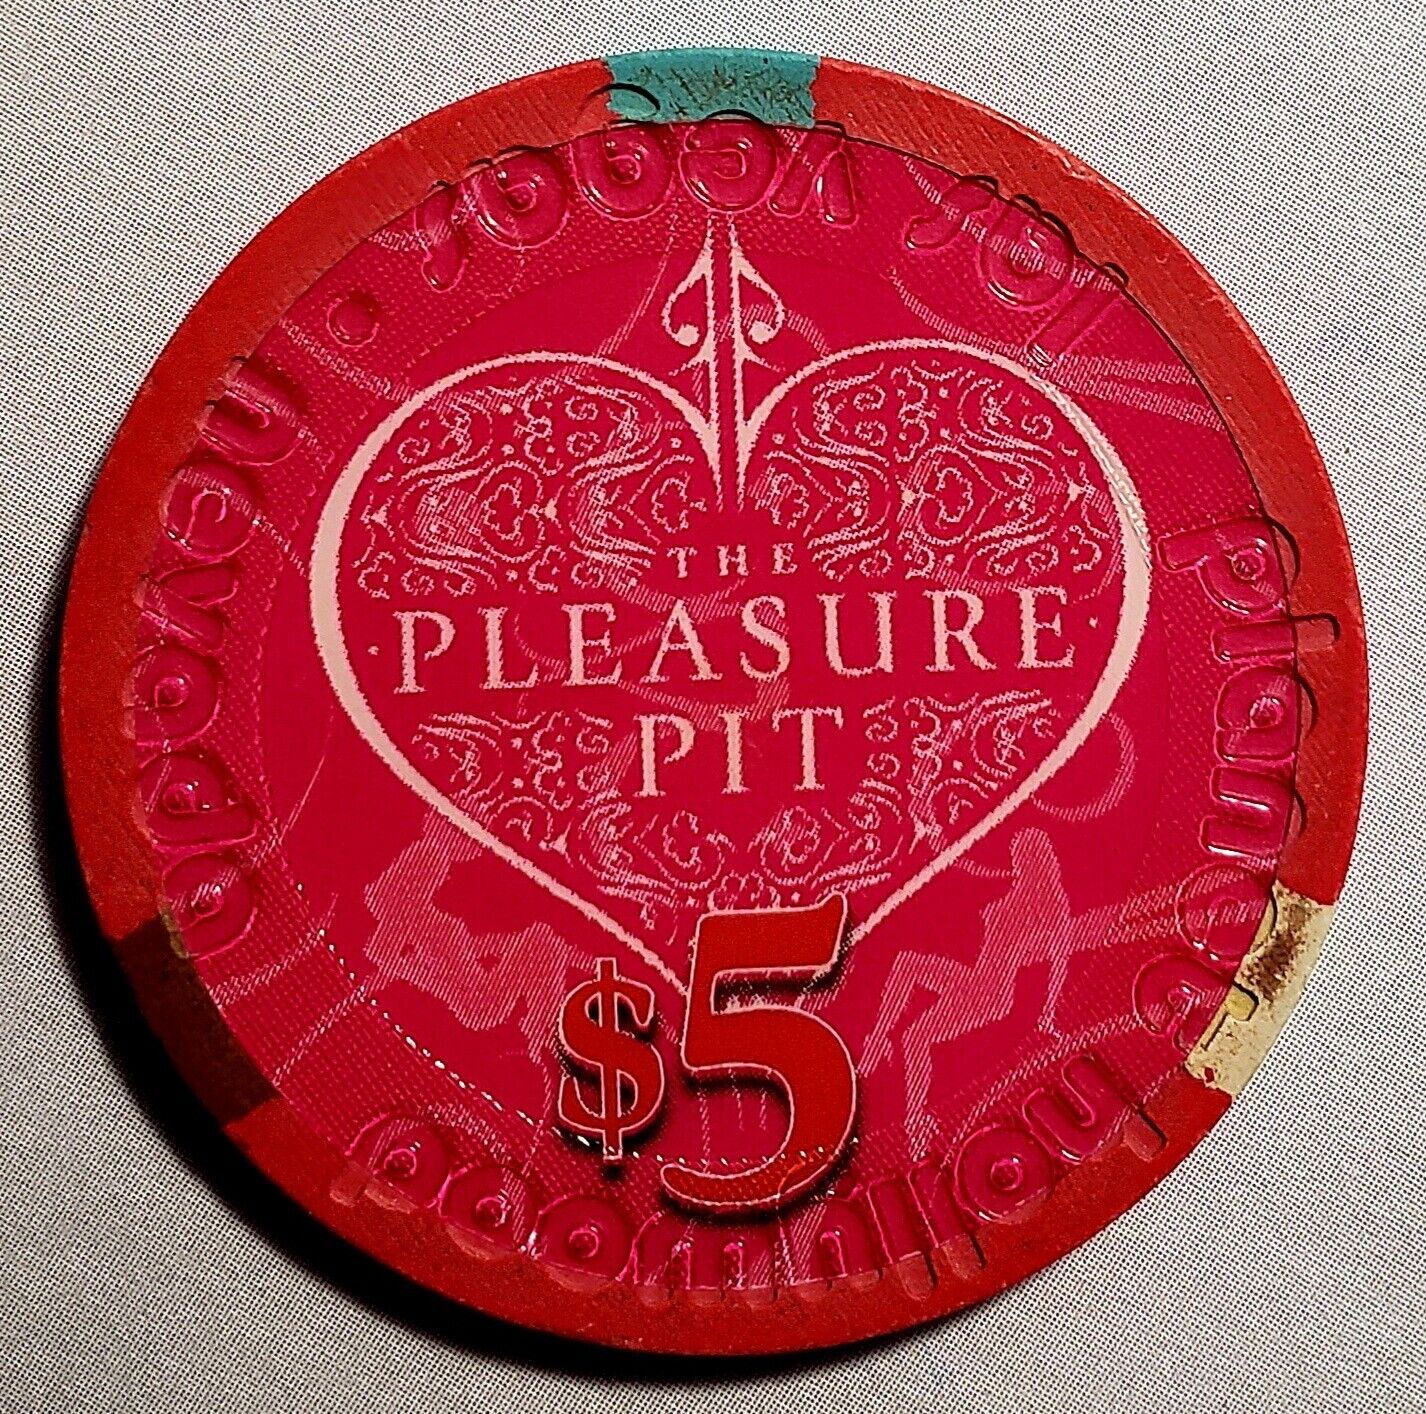 $5 Planet Hollywood Pleasure Pit Casino Chip - *All Pink Version* - Las Vegas  